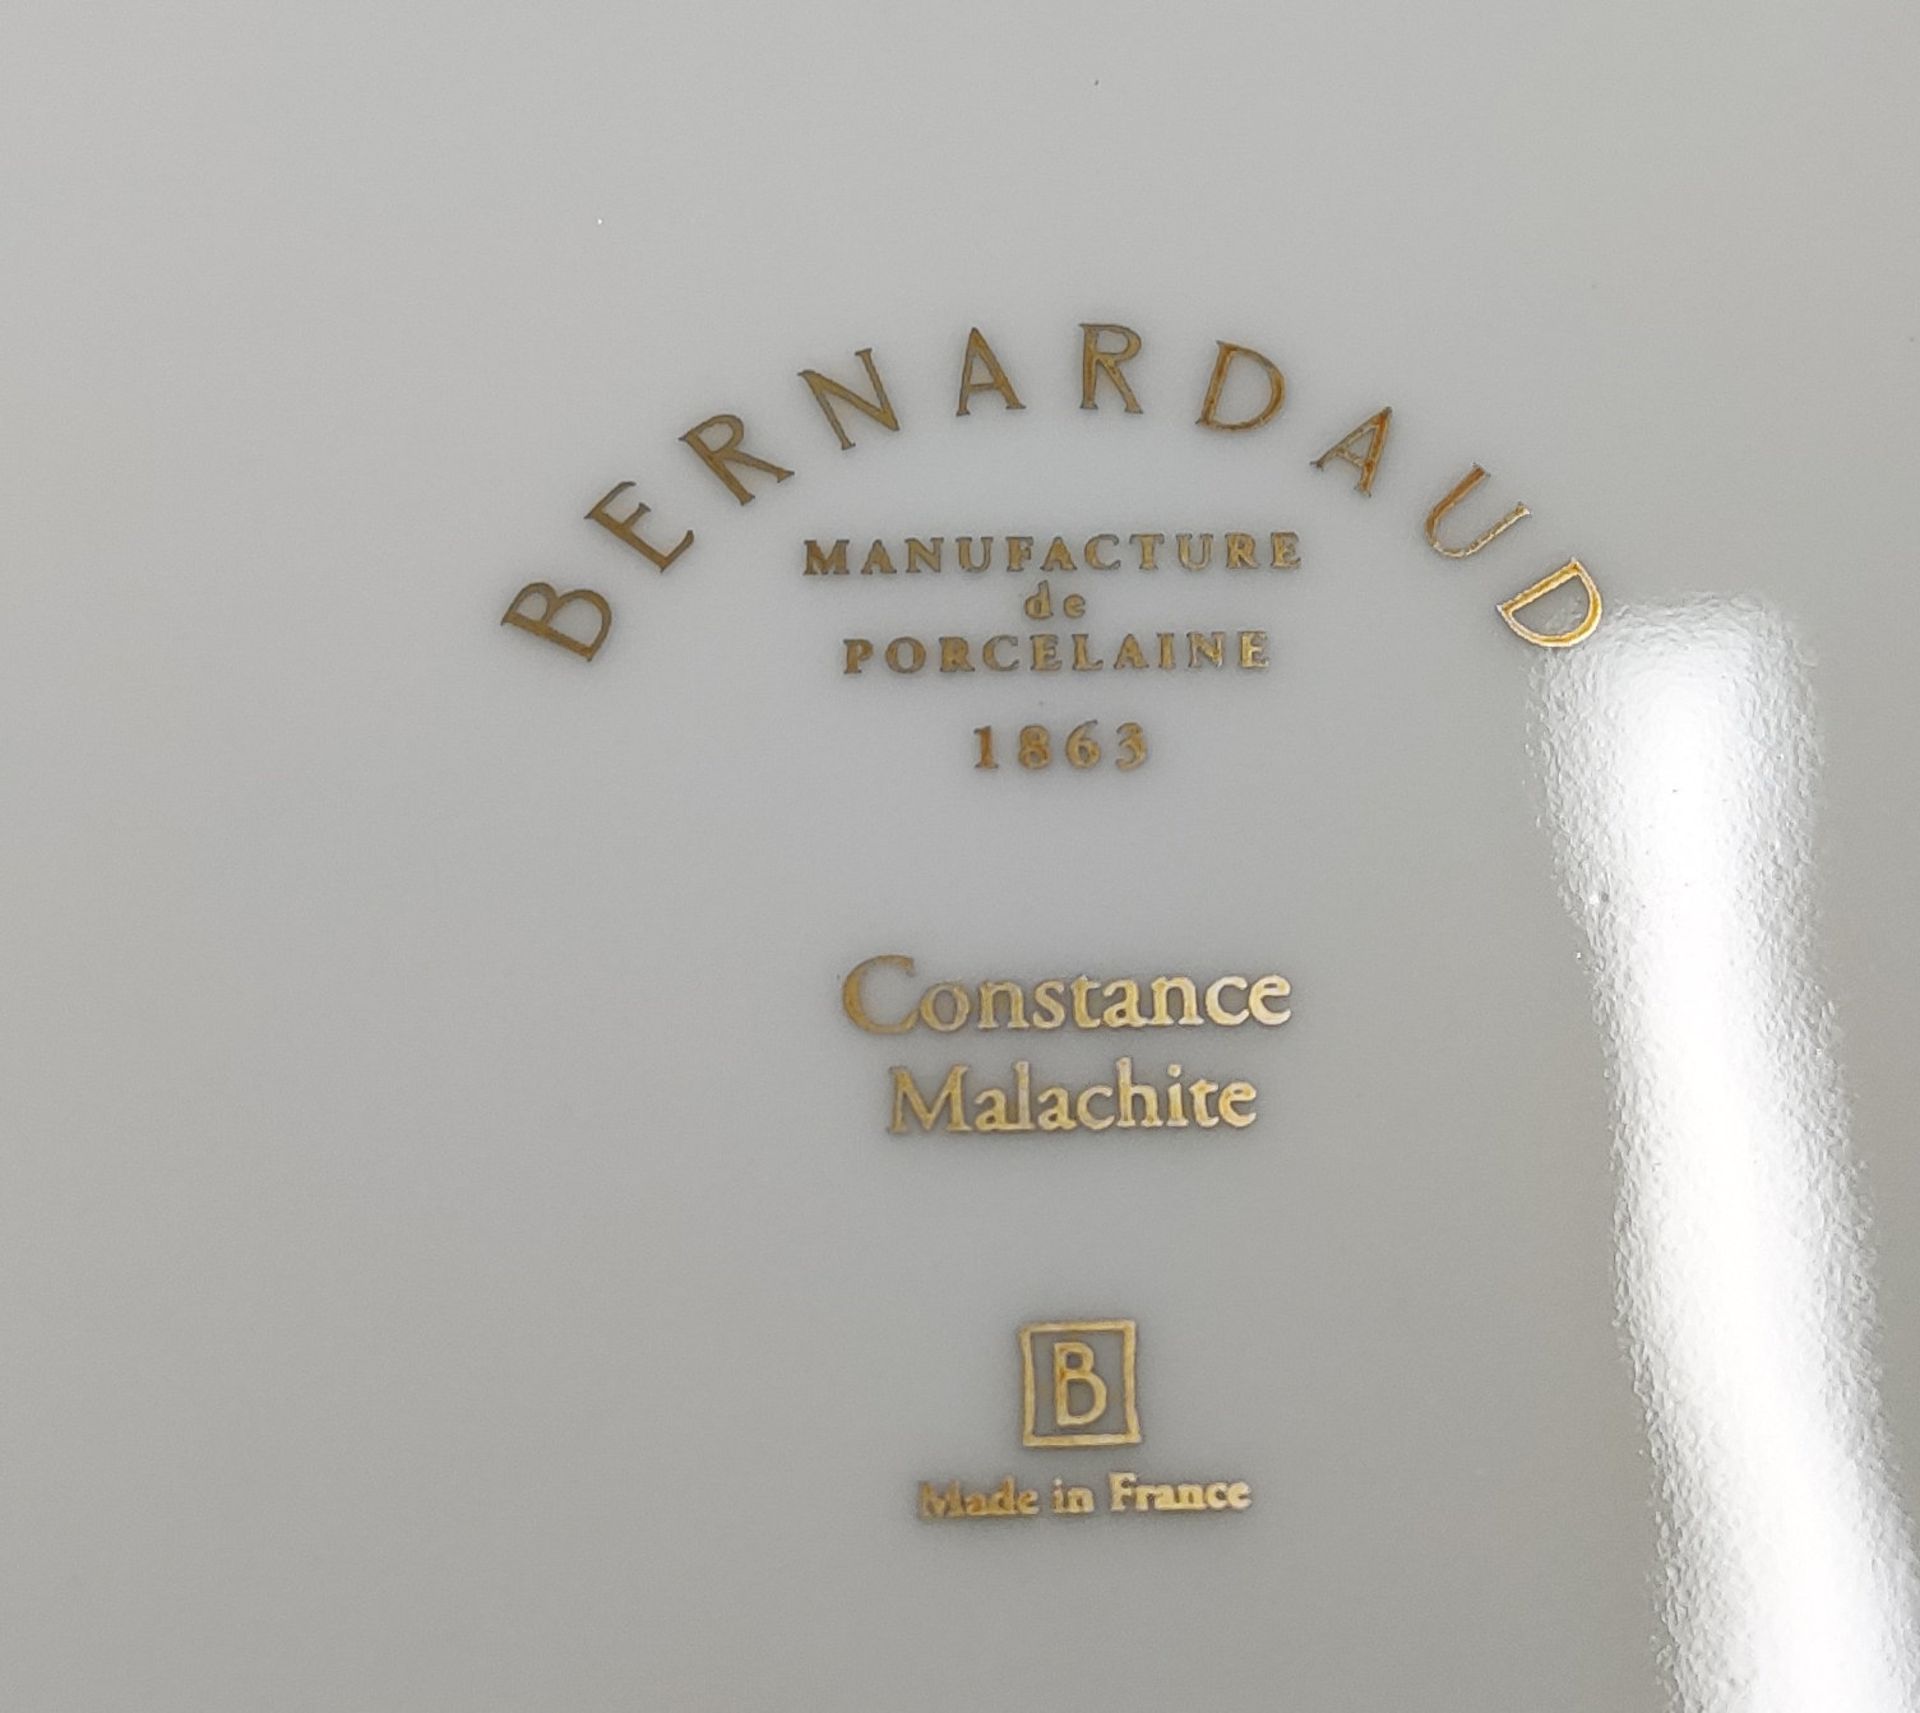 1 x BERNARDAUD Constance Malachite Service Plate X 2 - Boxed - Original RRP £358.00 - Image 14 of 20